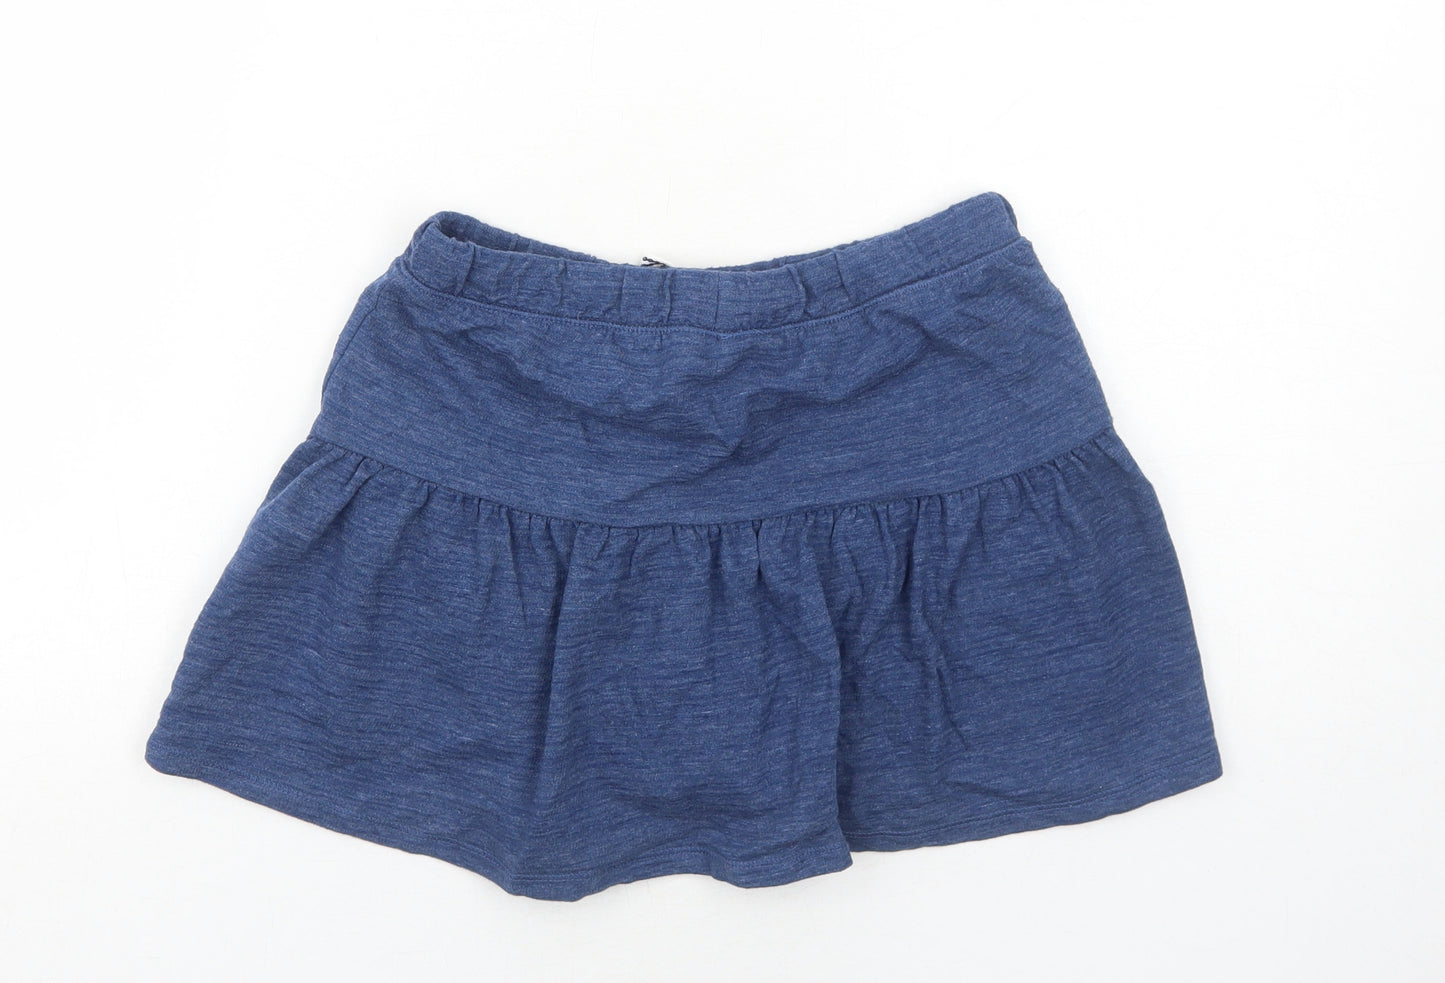 Cat & Jack Girls Blue Cotton Mini Skirt Size 10-11 Years Regular Pull On